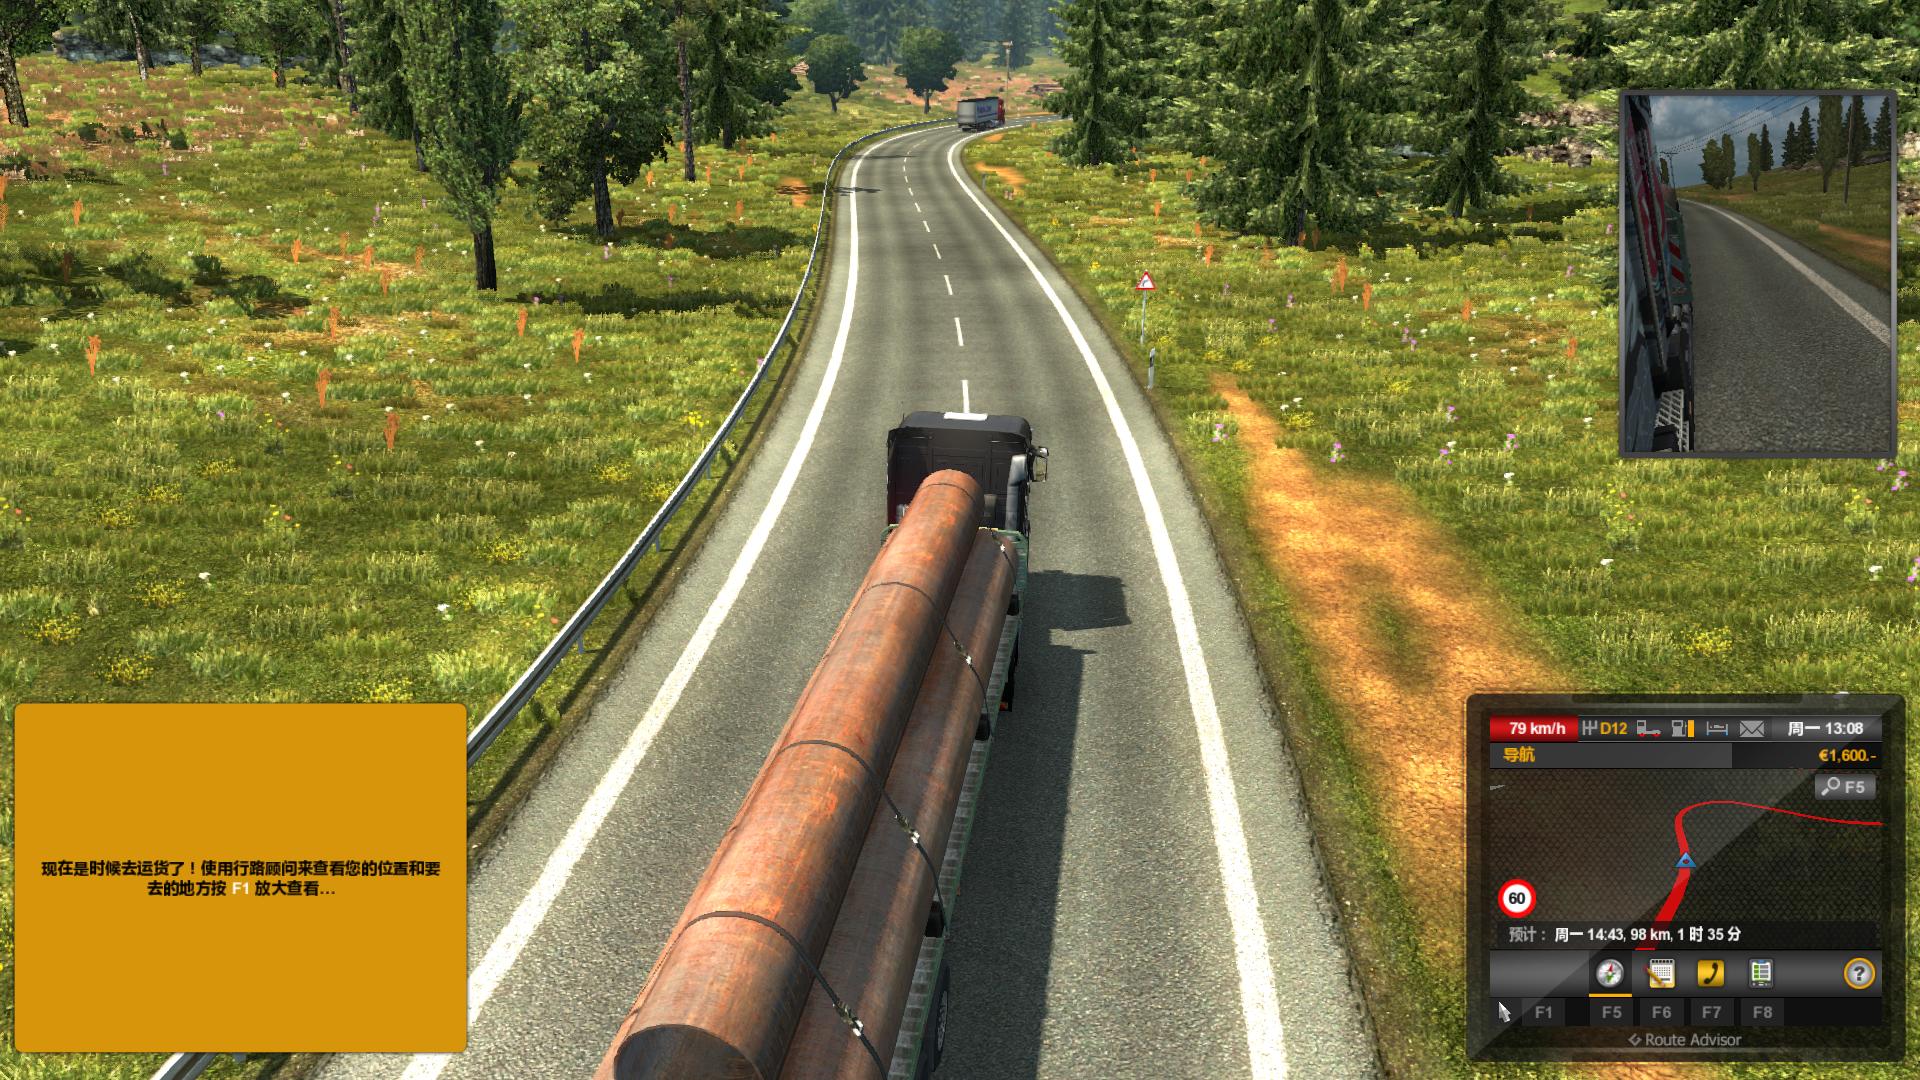 ŷ޿ģ2Euro Truck Simulator 2v1.28ʽƹMODv2.3